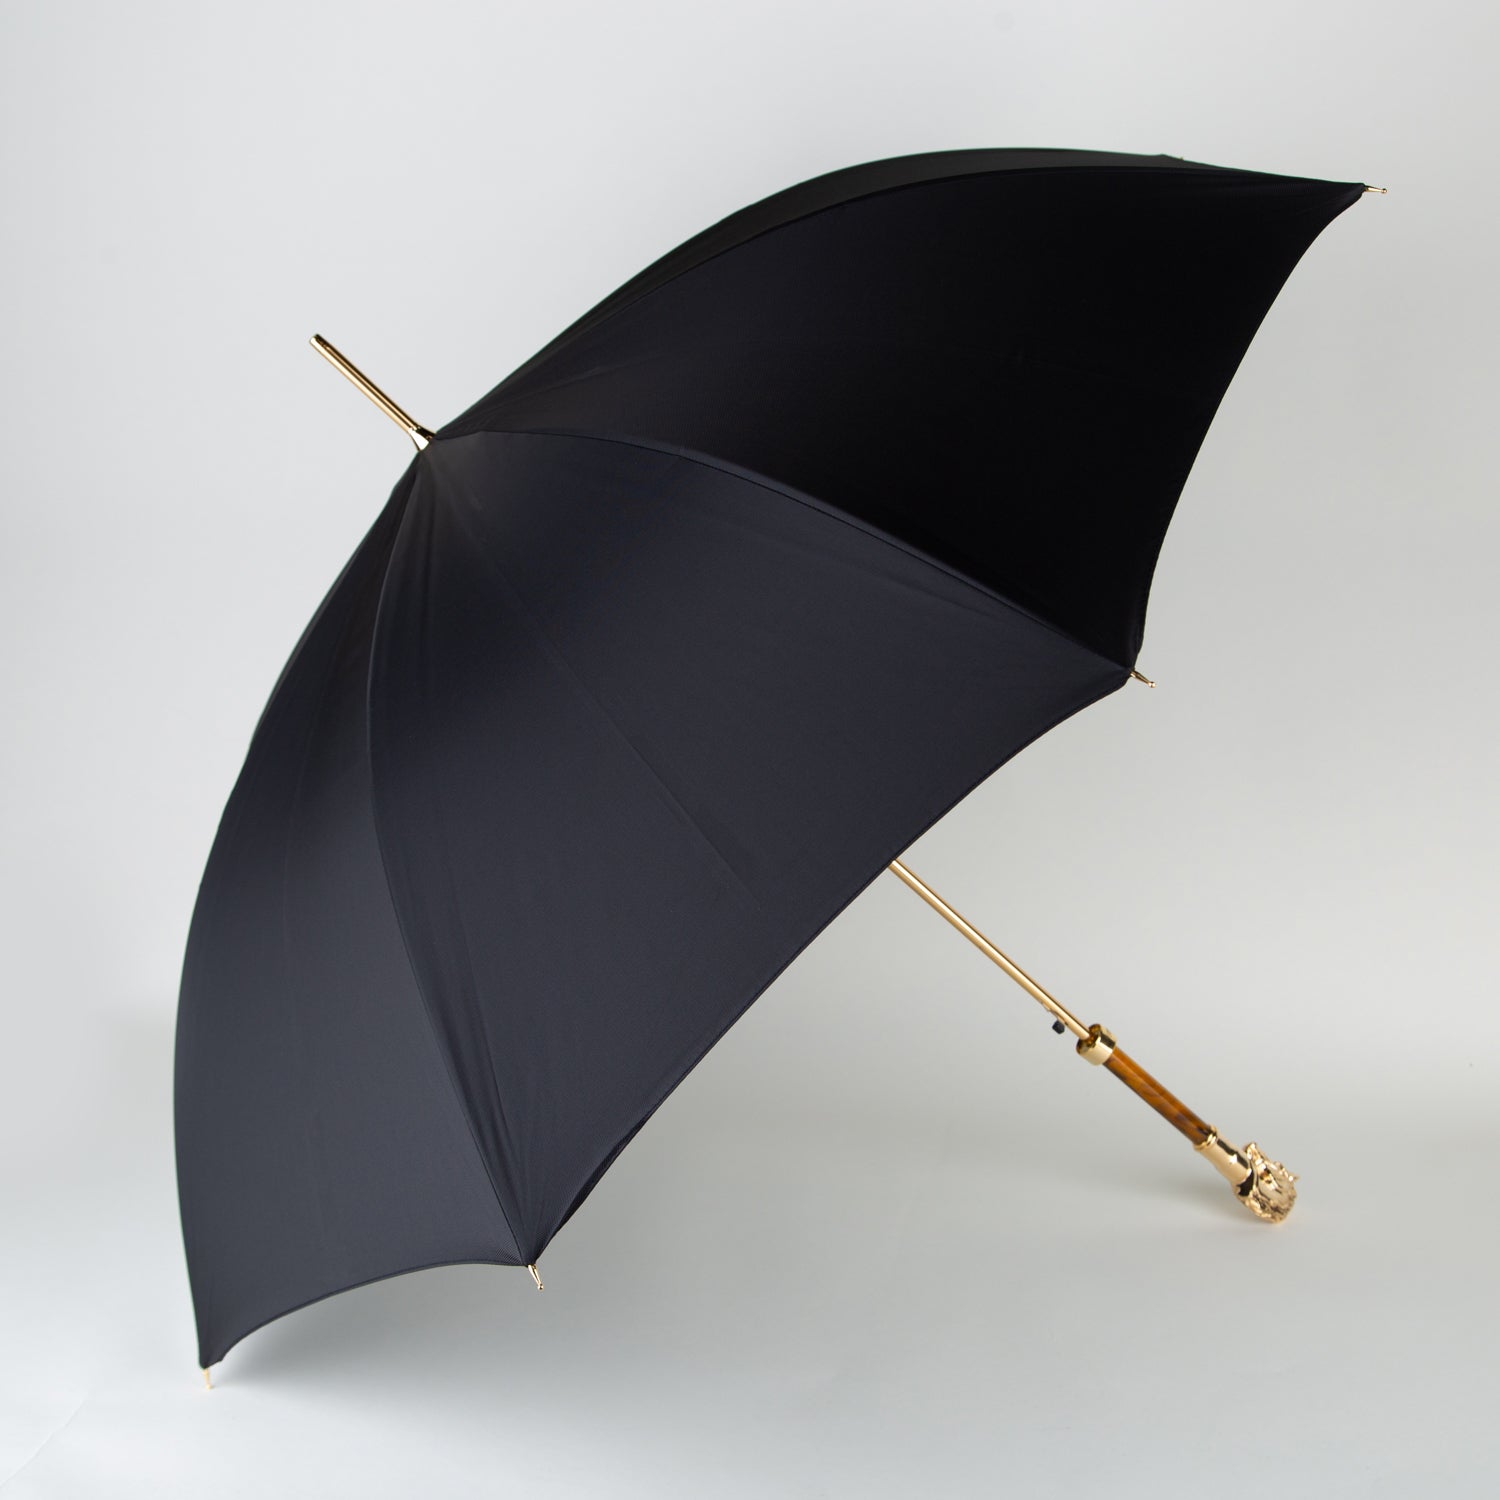 golden horse umbrella with a black canopy